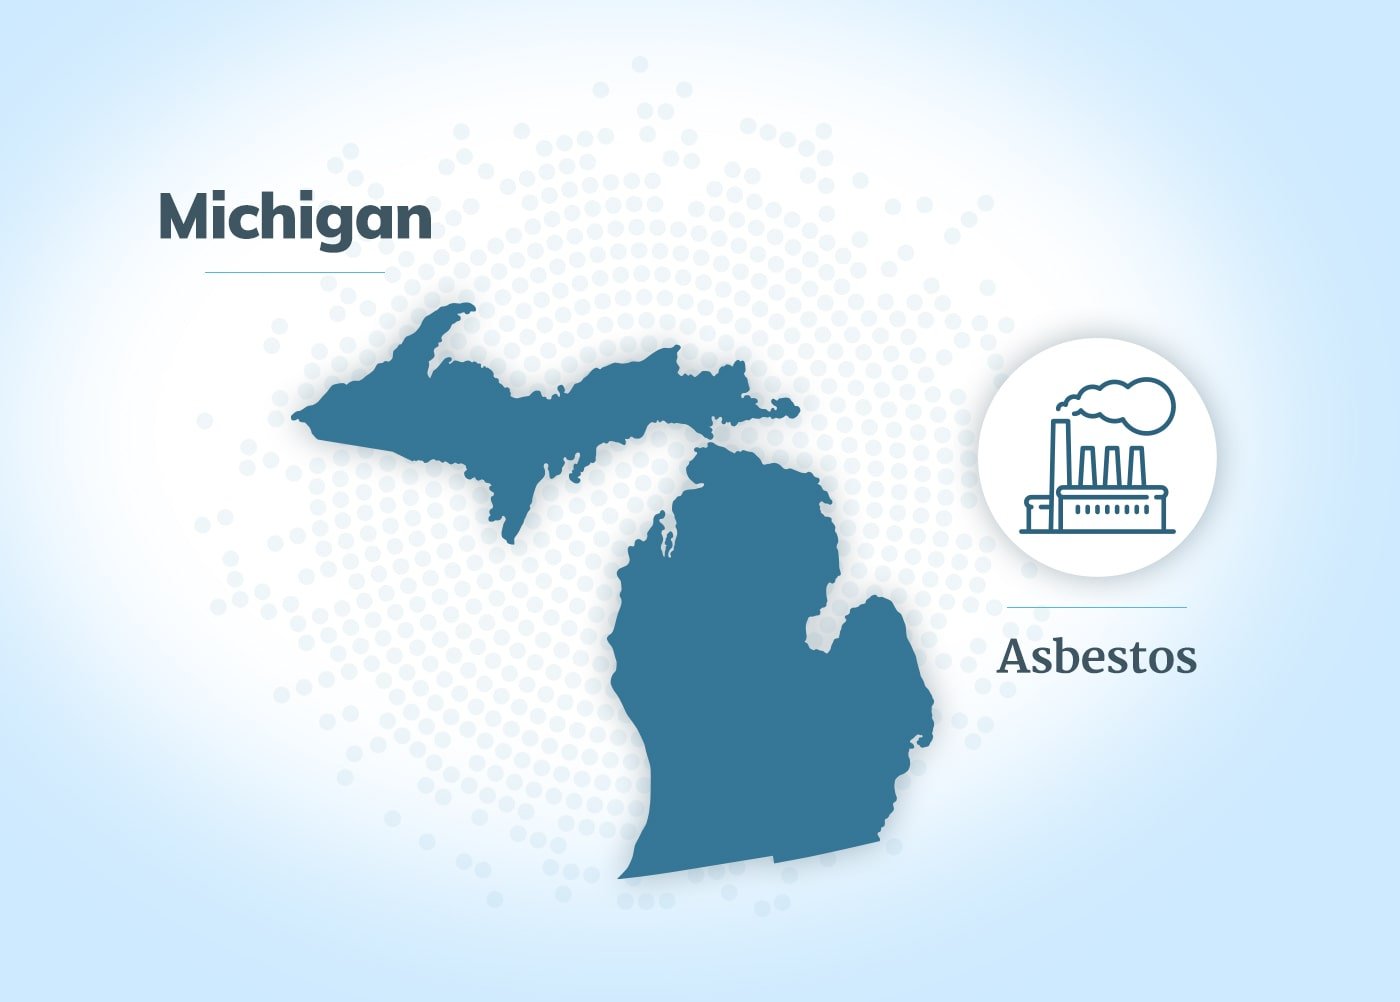 Asbestos exposure in Michigan